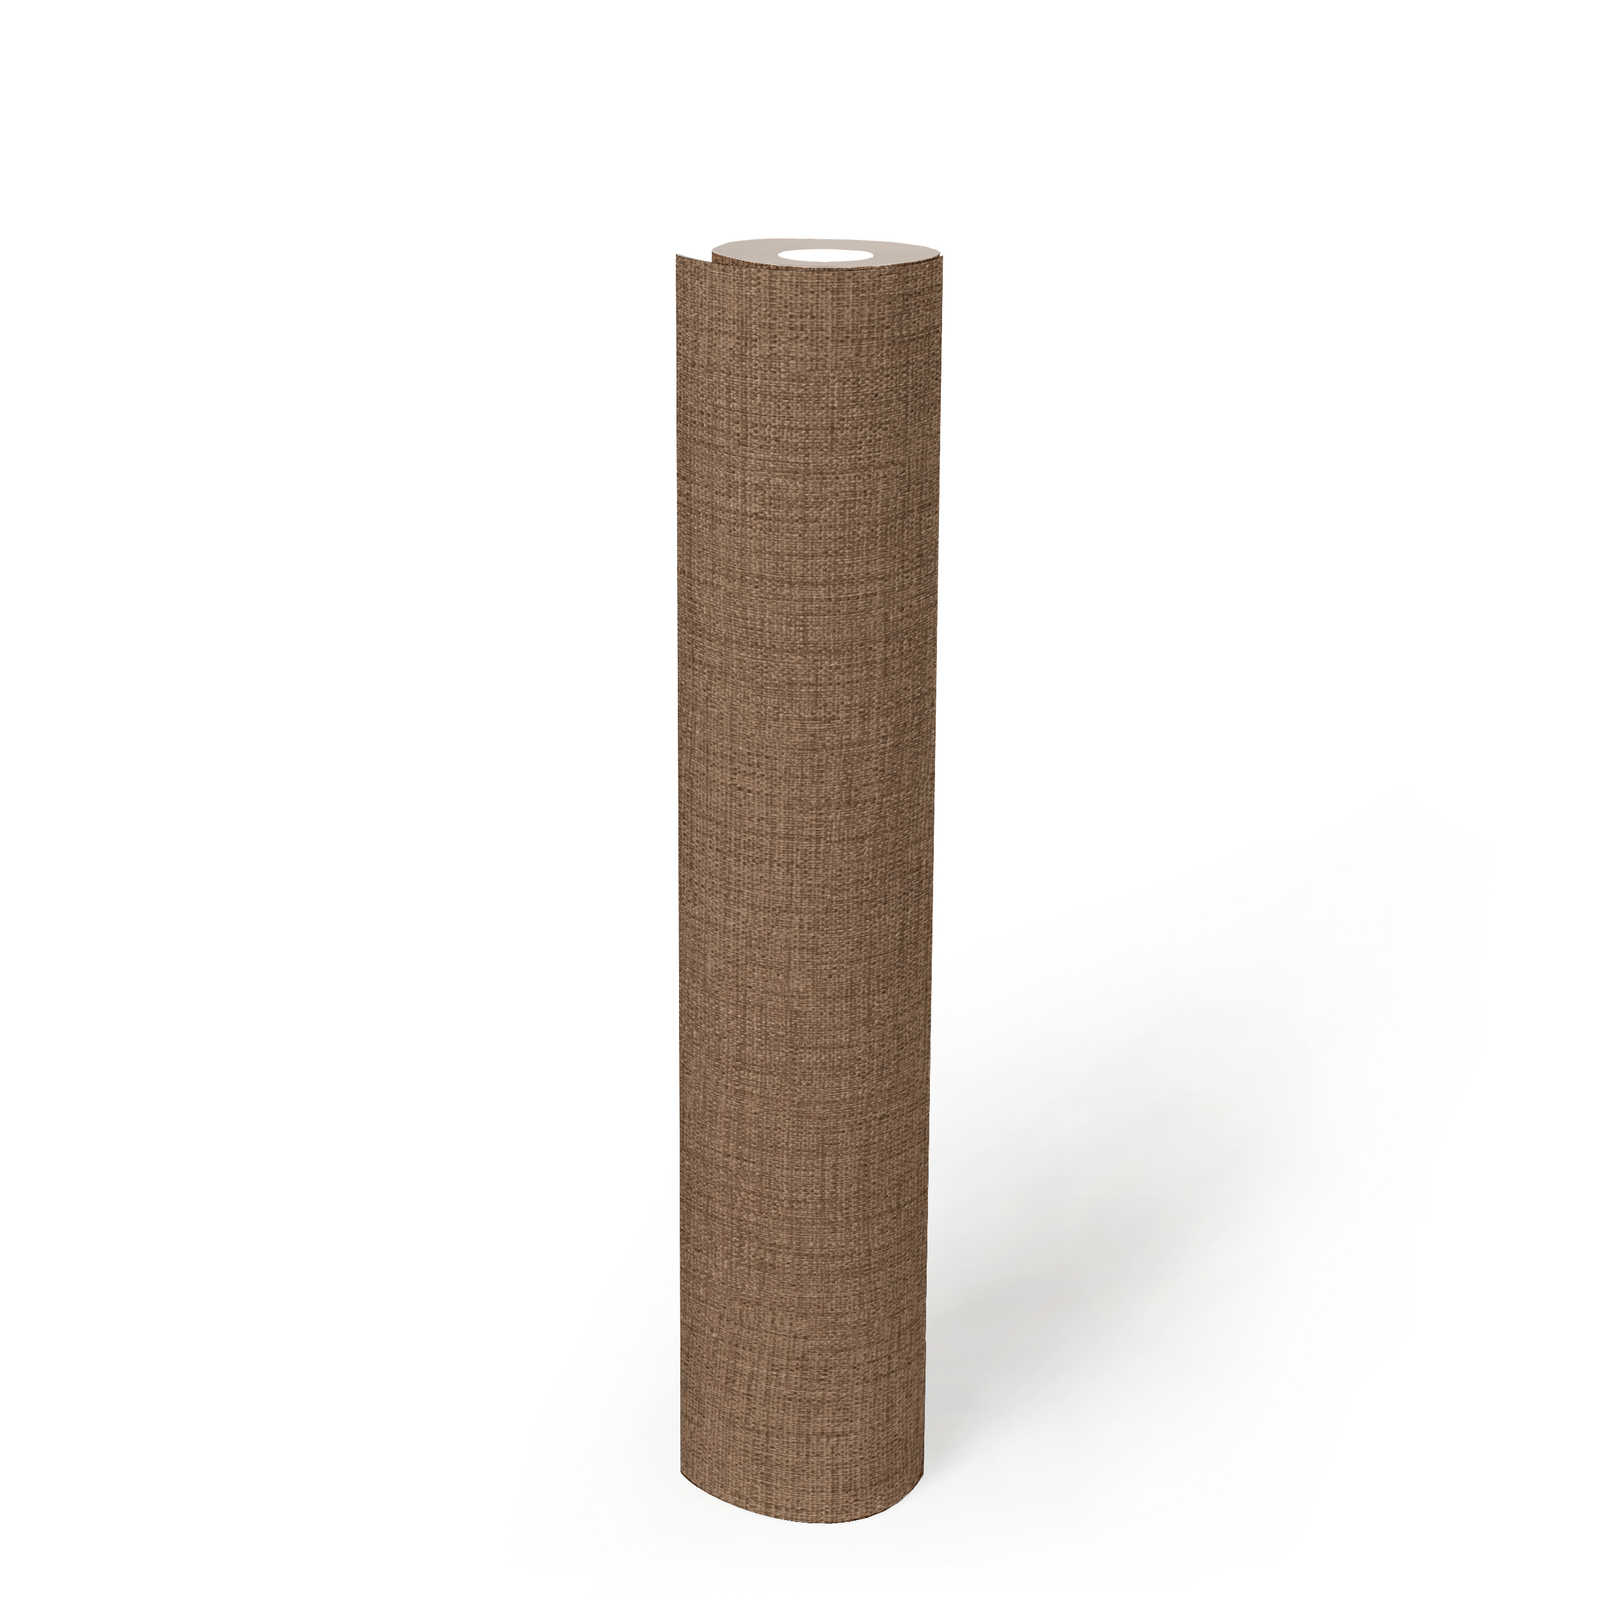             Non-woven wallpaper brown with textile optics & structure design
        